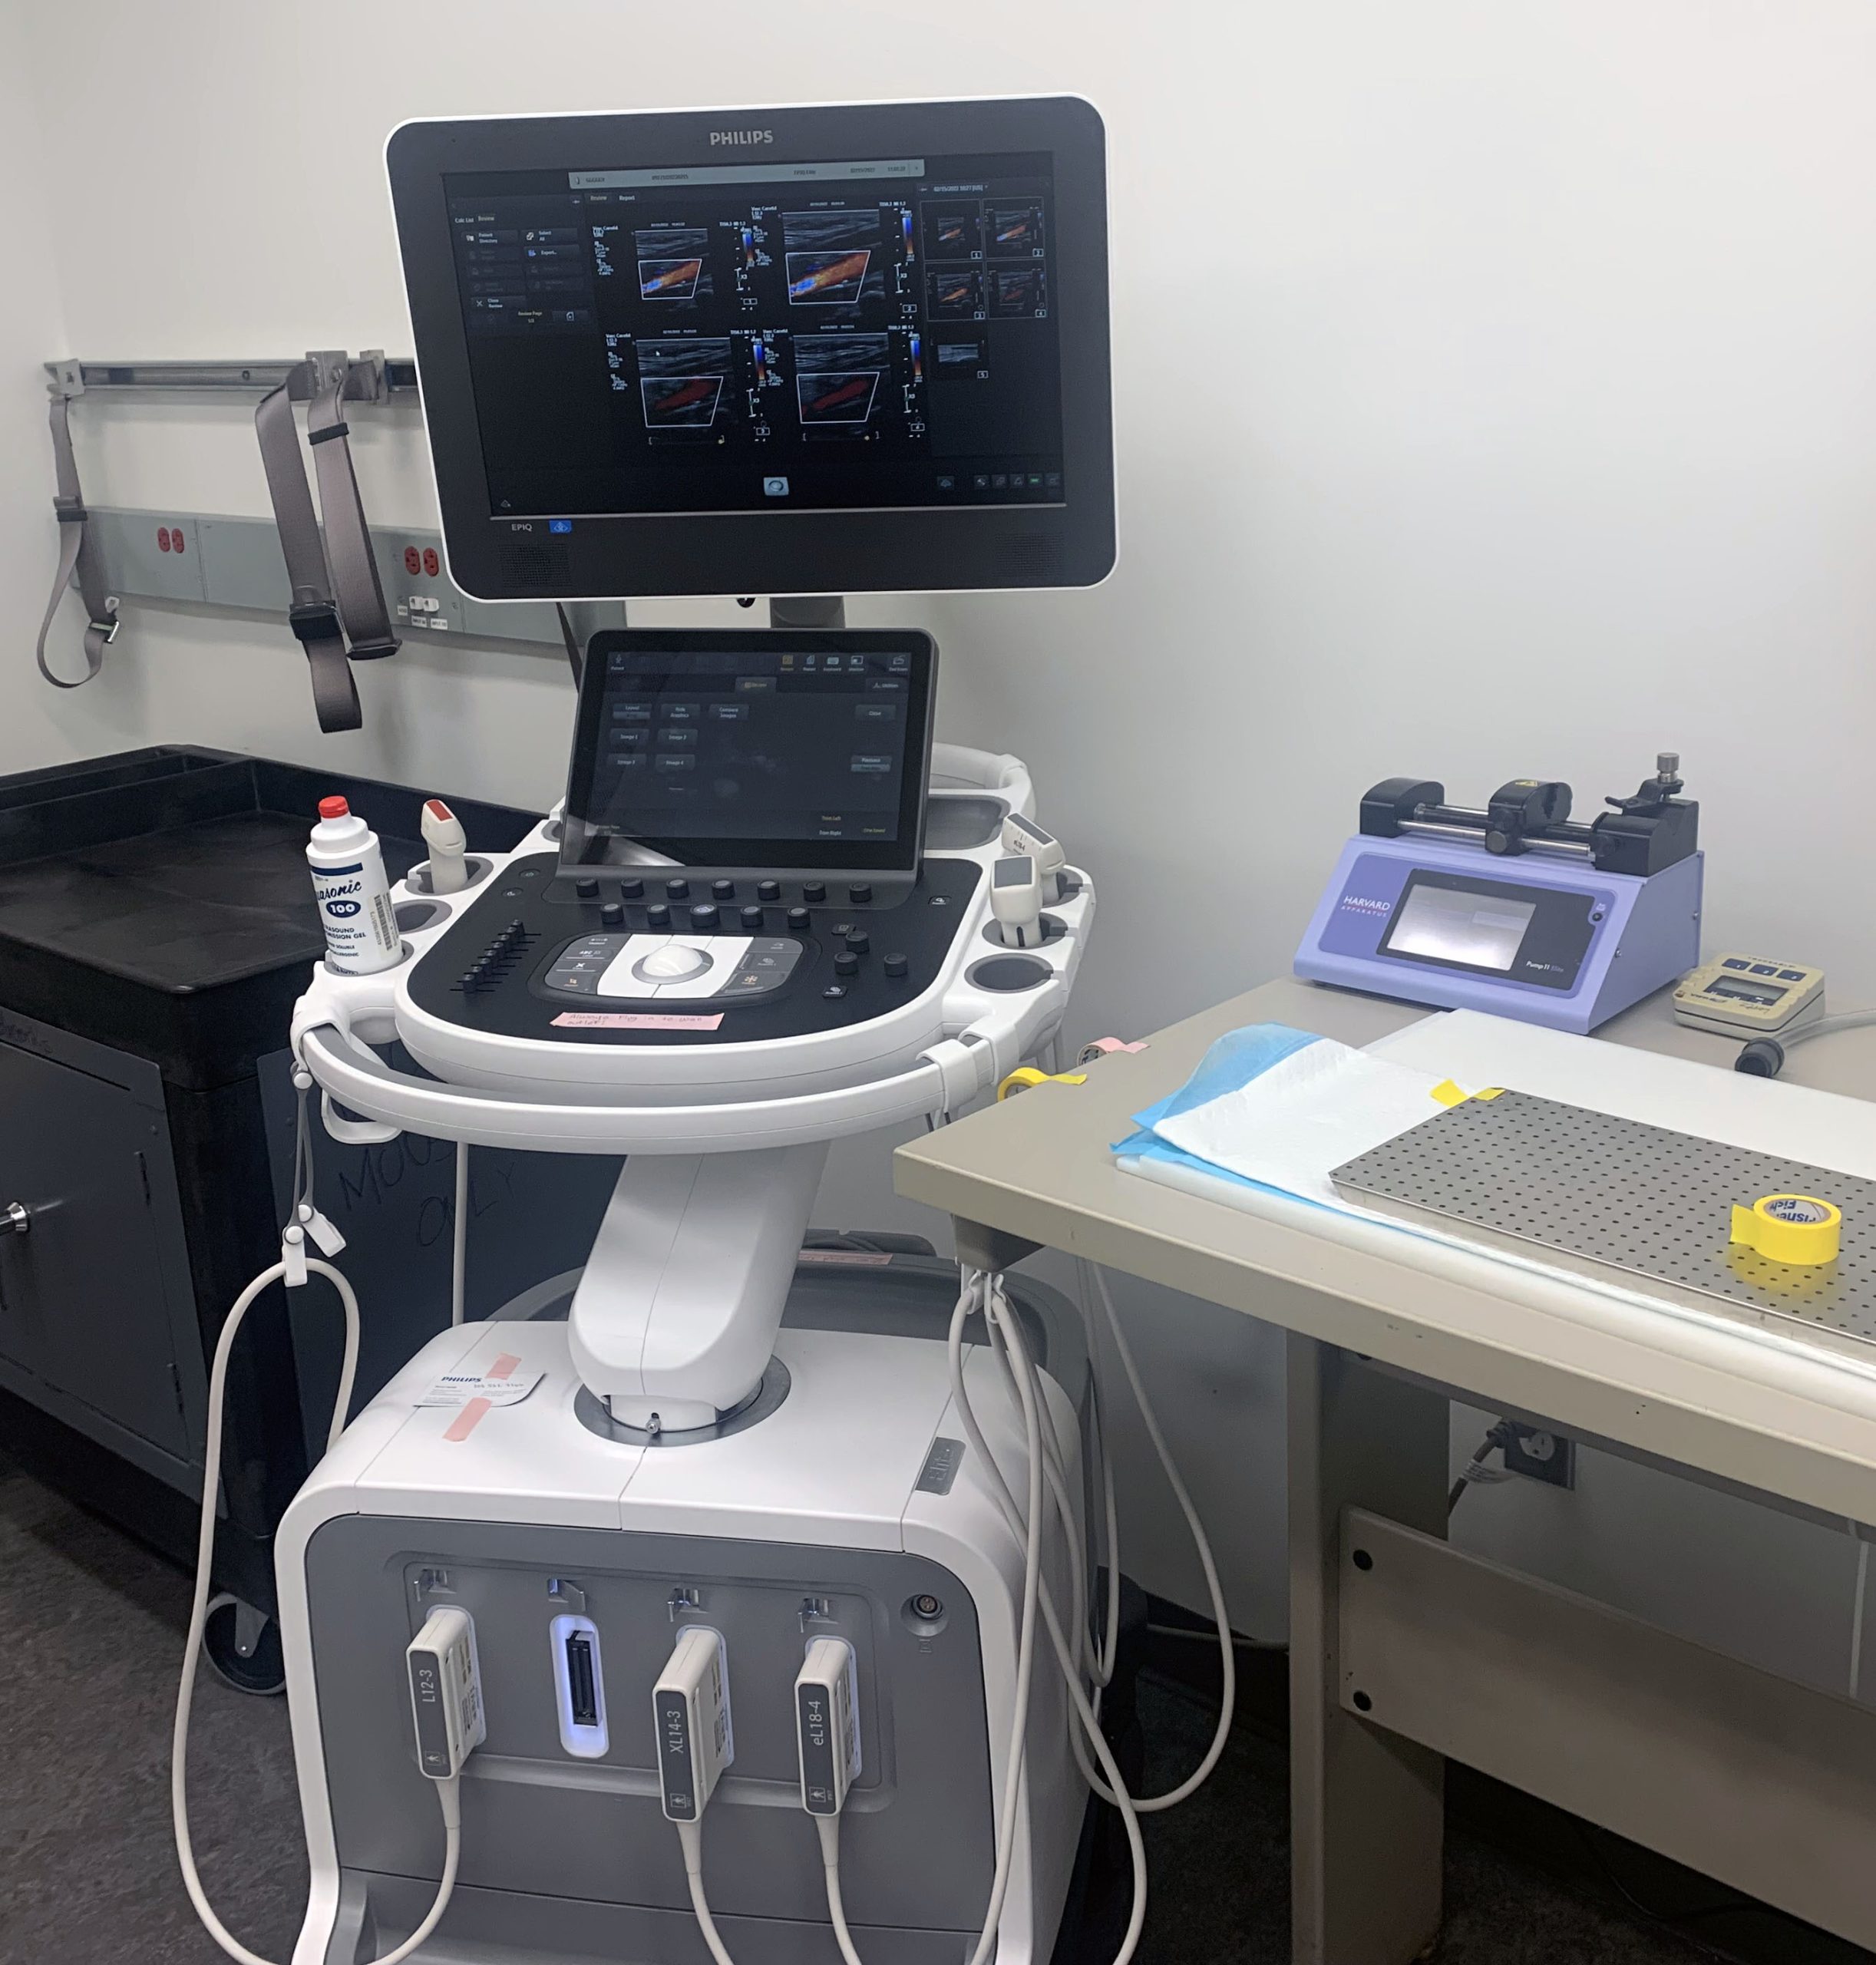 Contrast-enhanced ultrasound molecular imaging systems